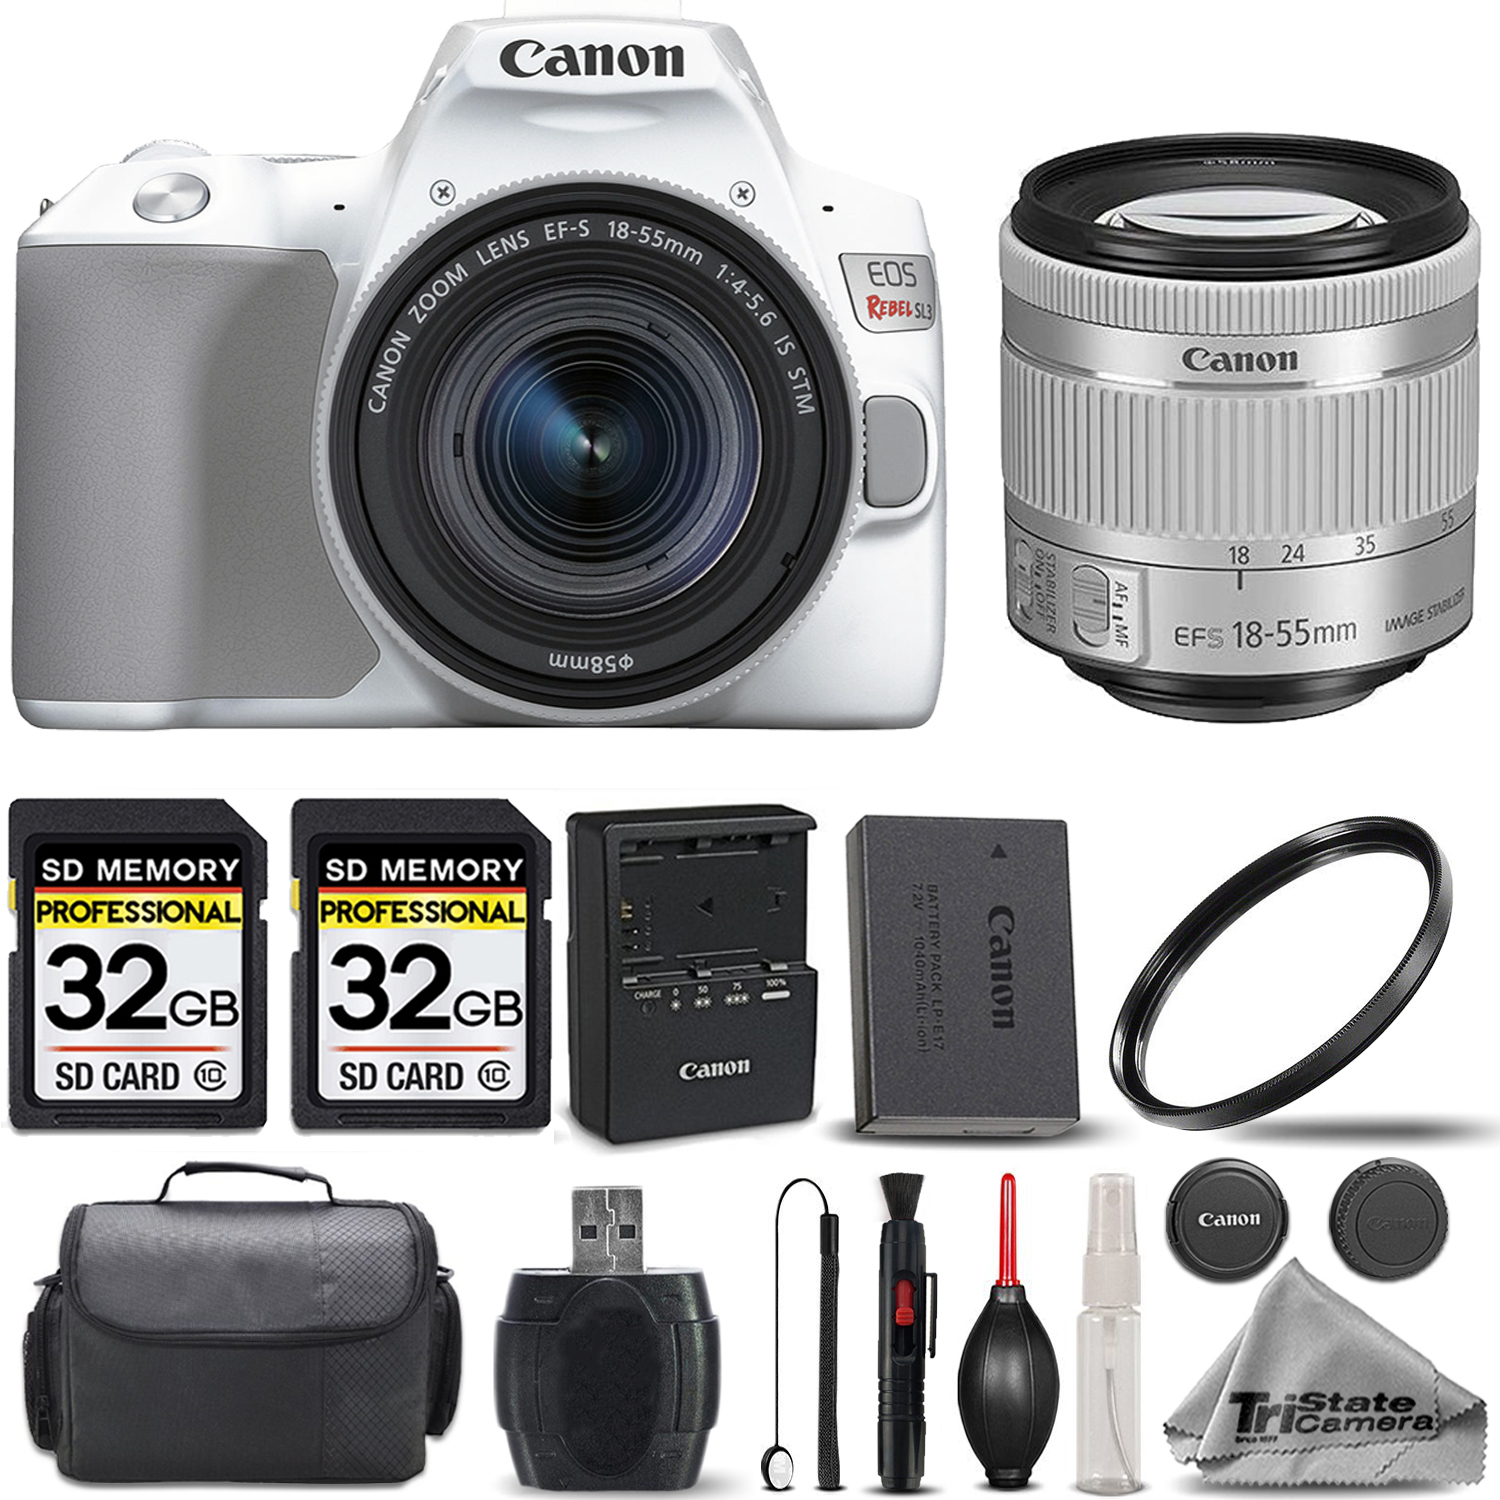 EOS Rebel SL3 Camera(White) + 18-55mm STM Lens + 64GB -Basic Accessory Kit *FREE SHIPPING*